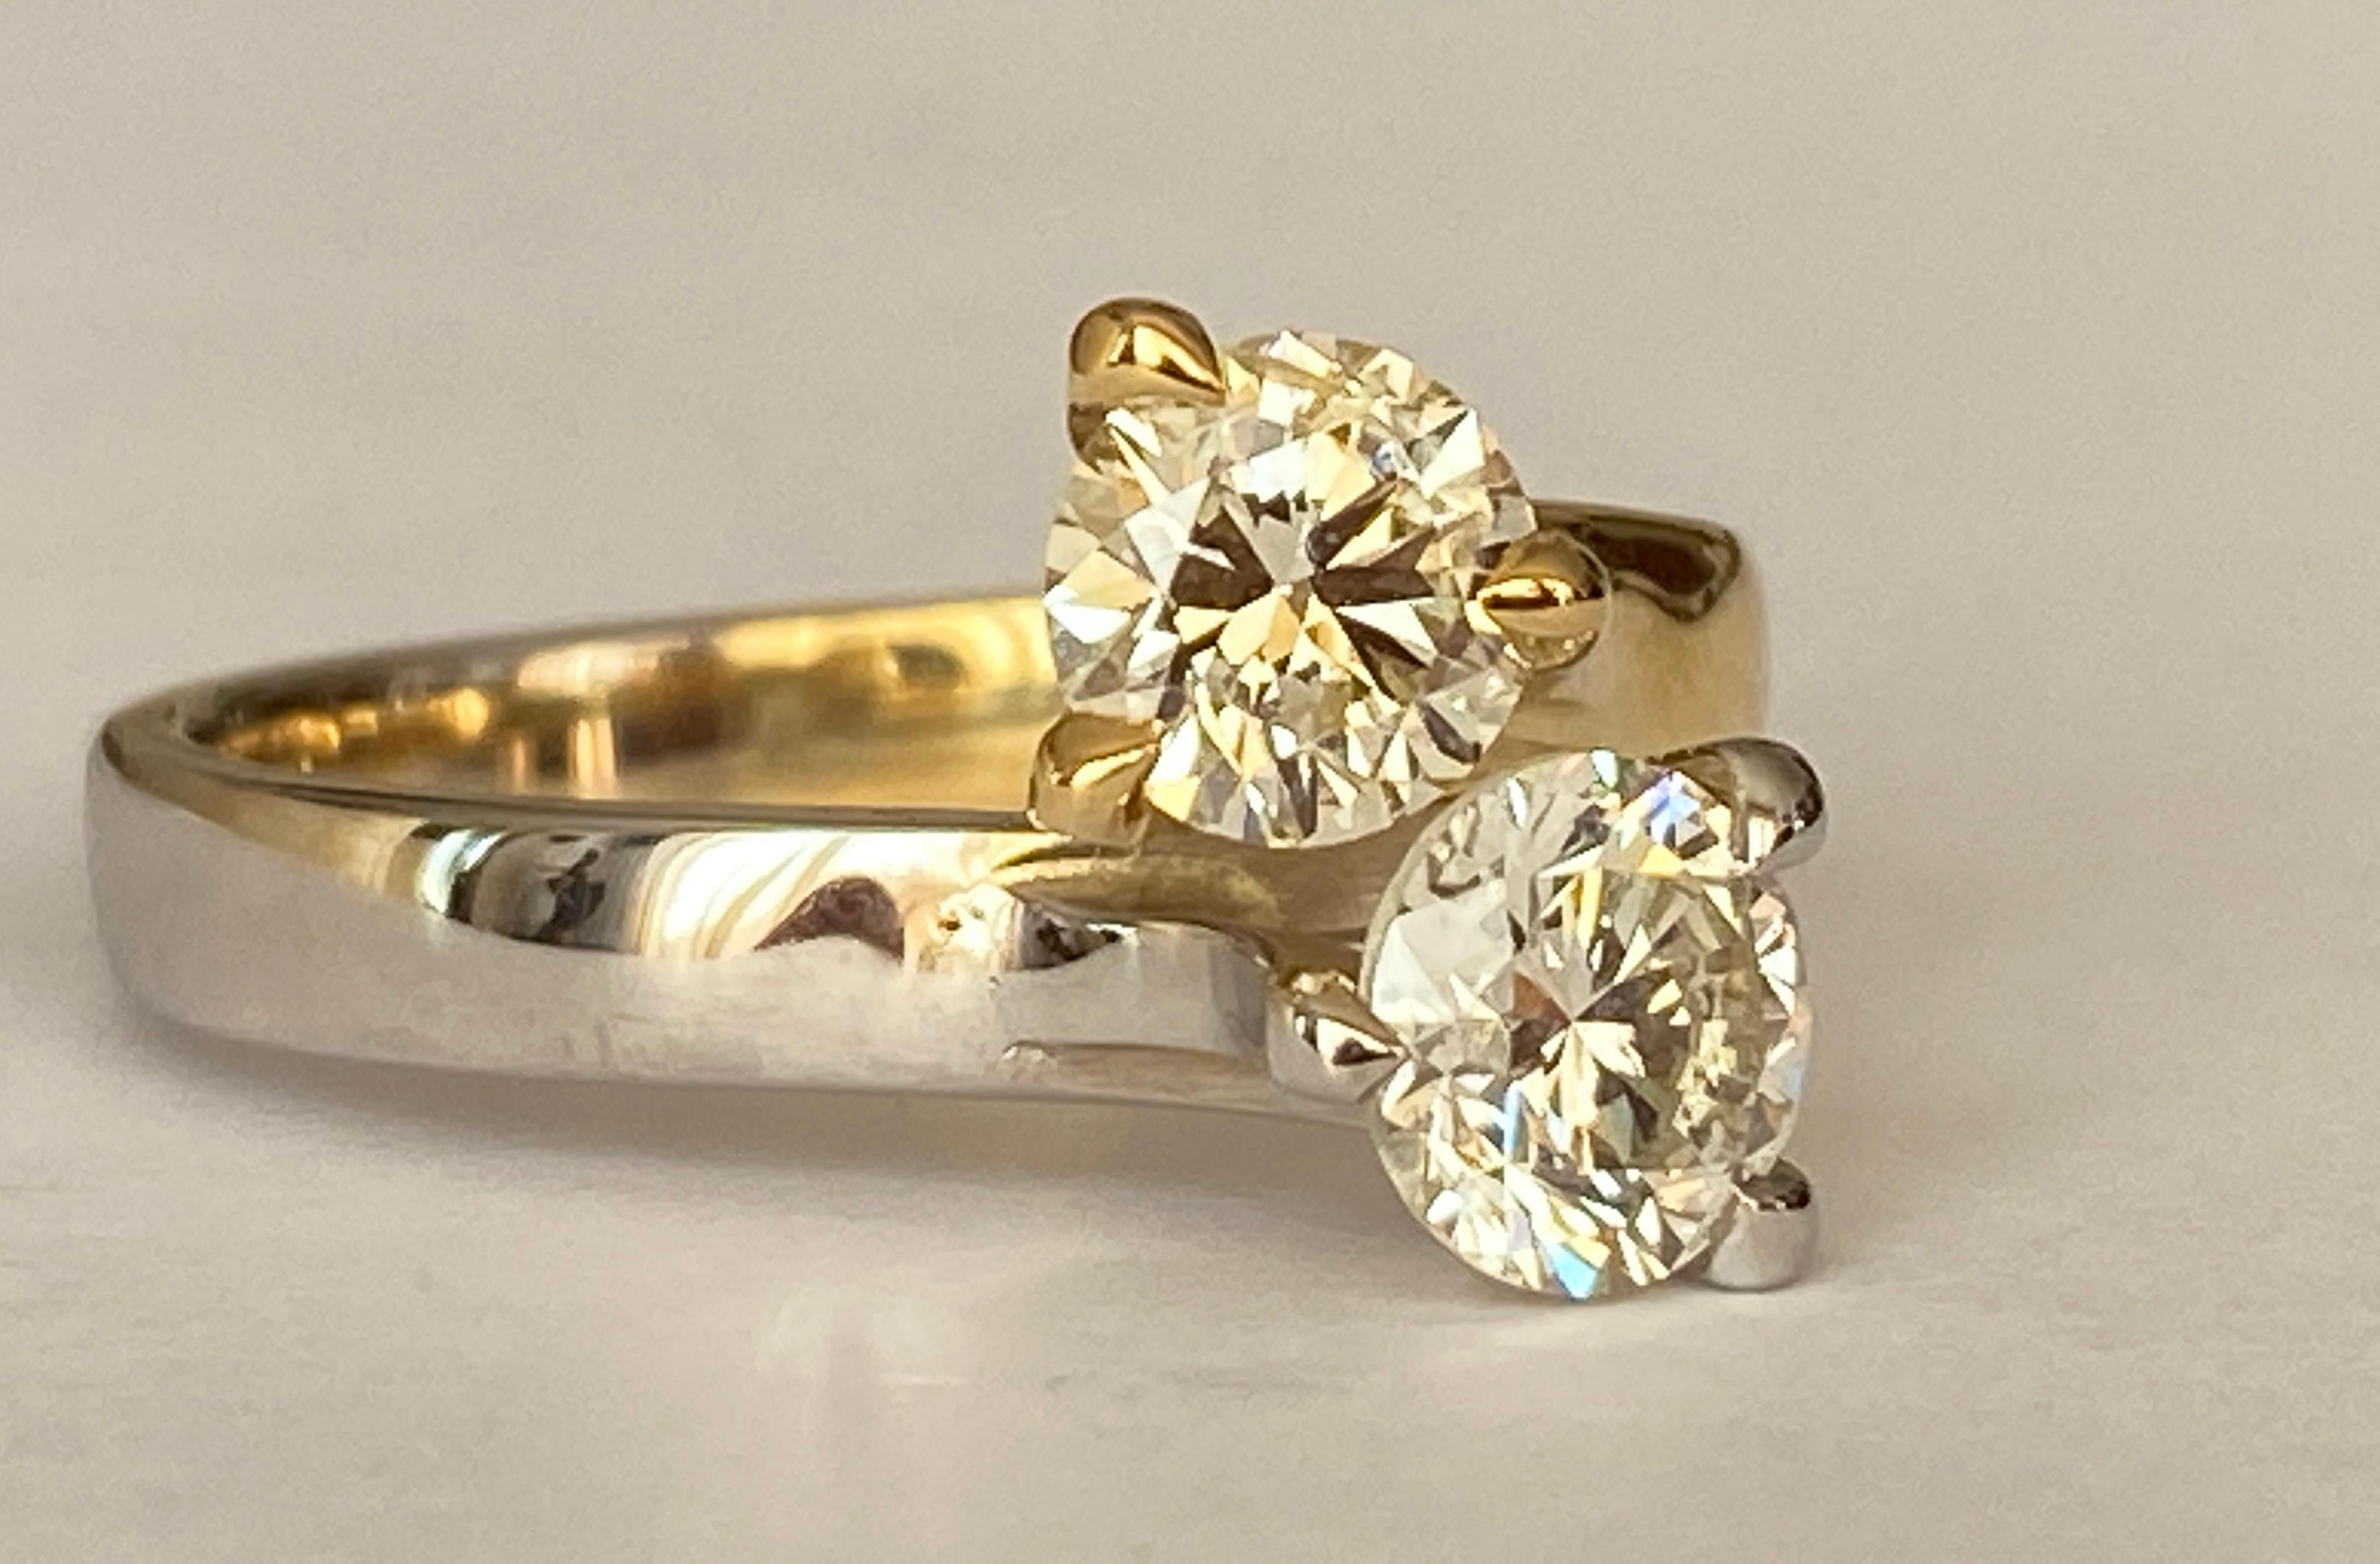 Brilliant Cut 18 Karat Yellow and White Gold 'Toi et Moi' Ring with 1.42 Ct Diamonds